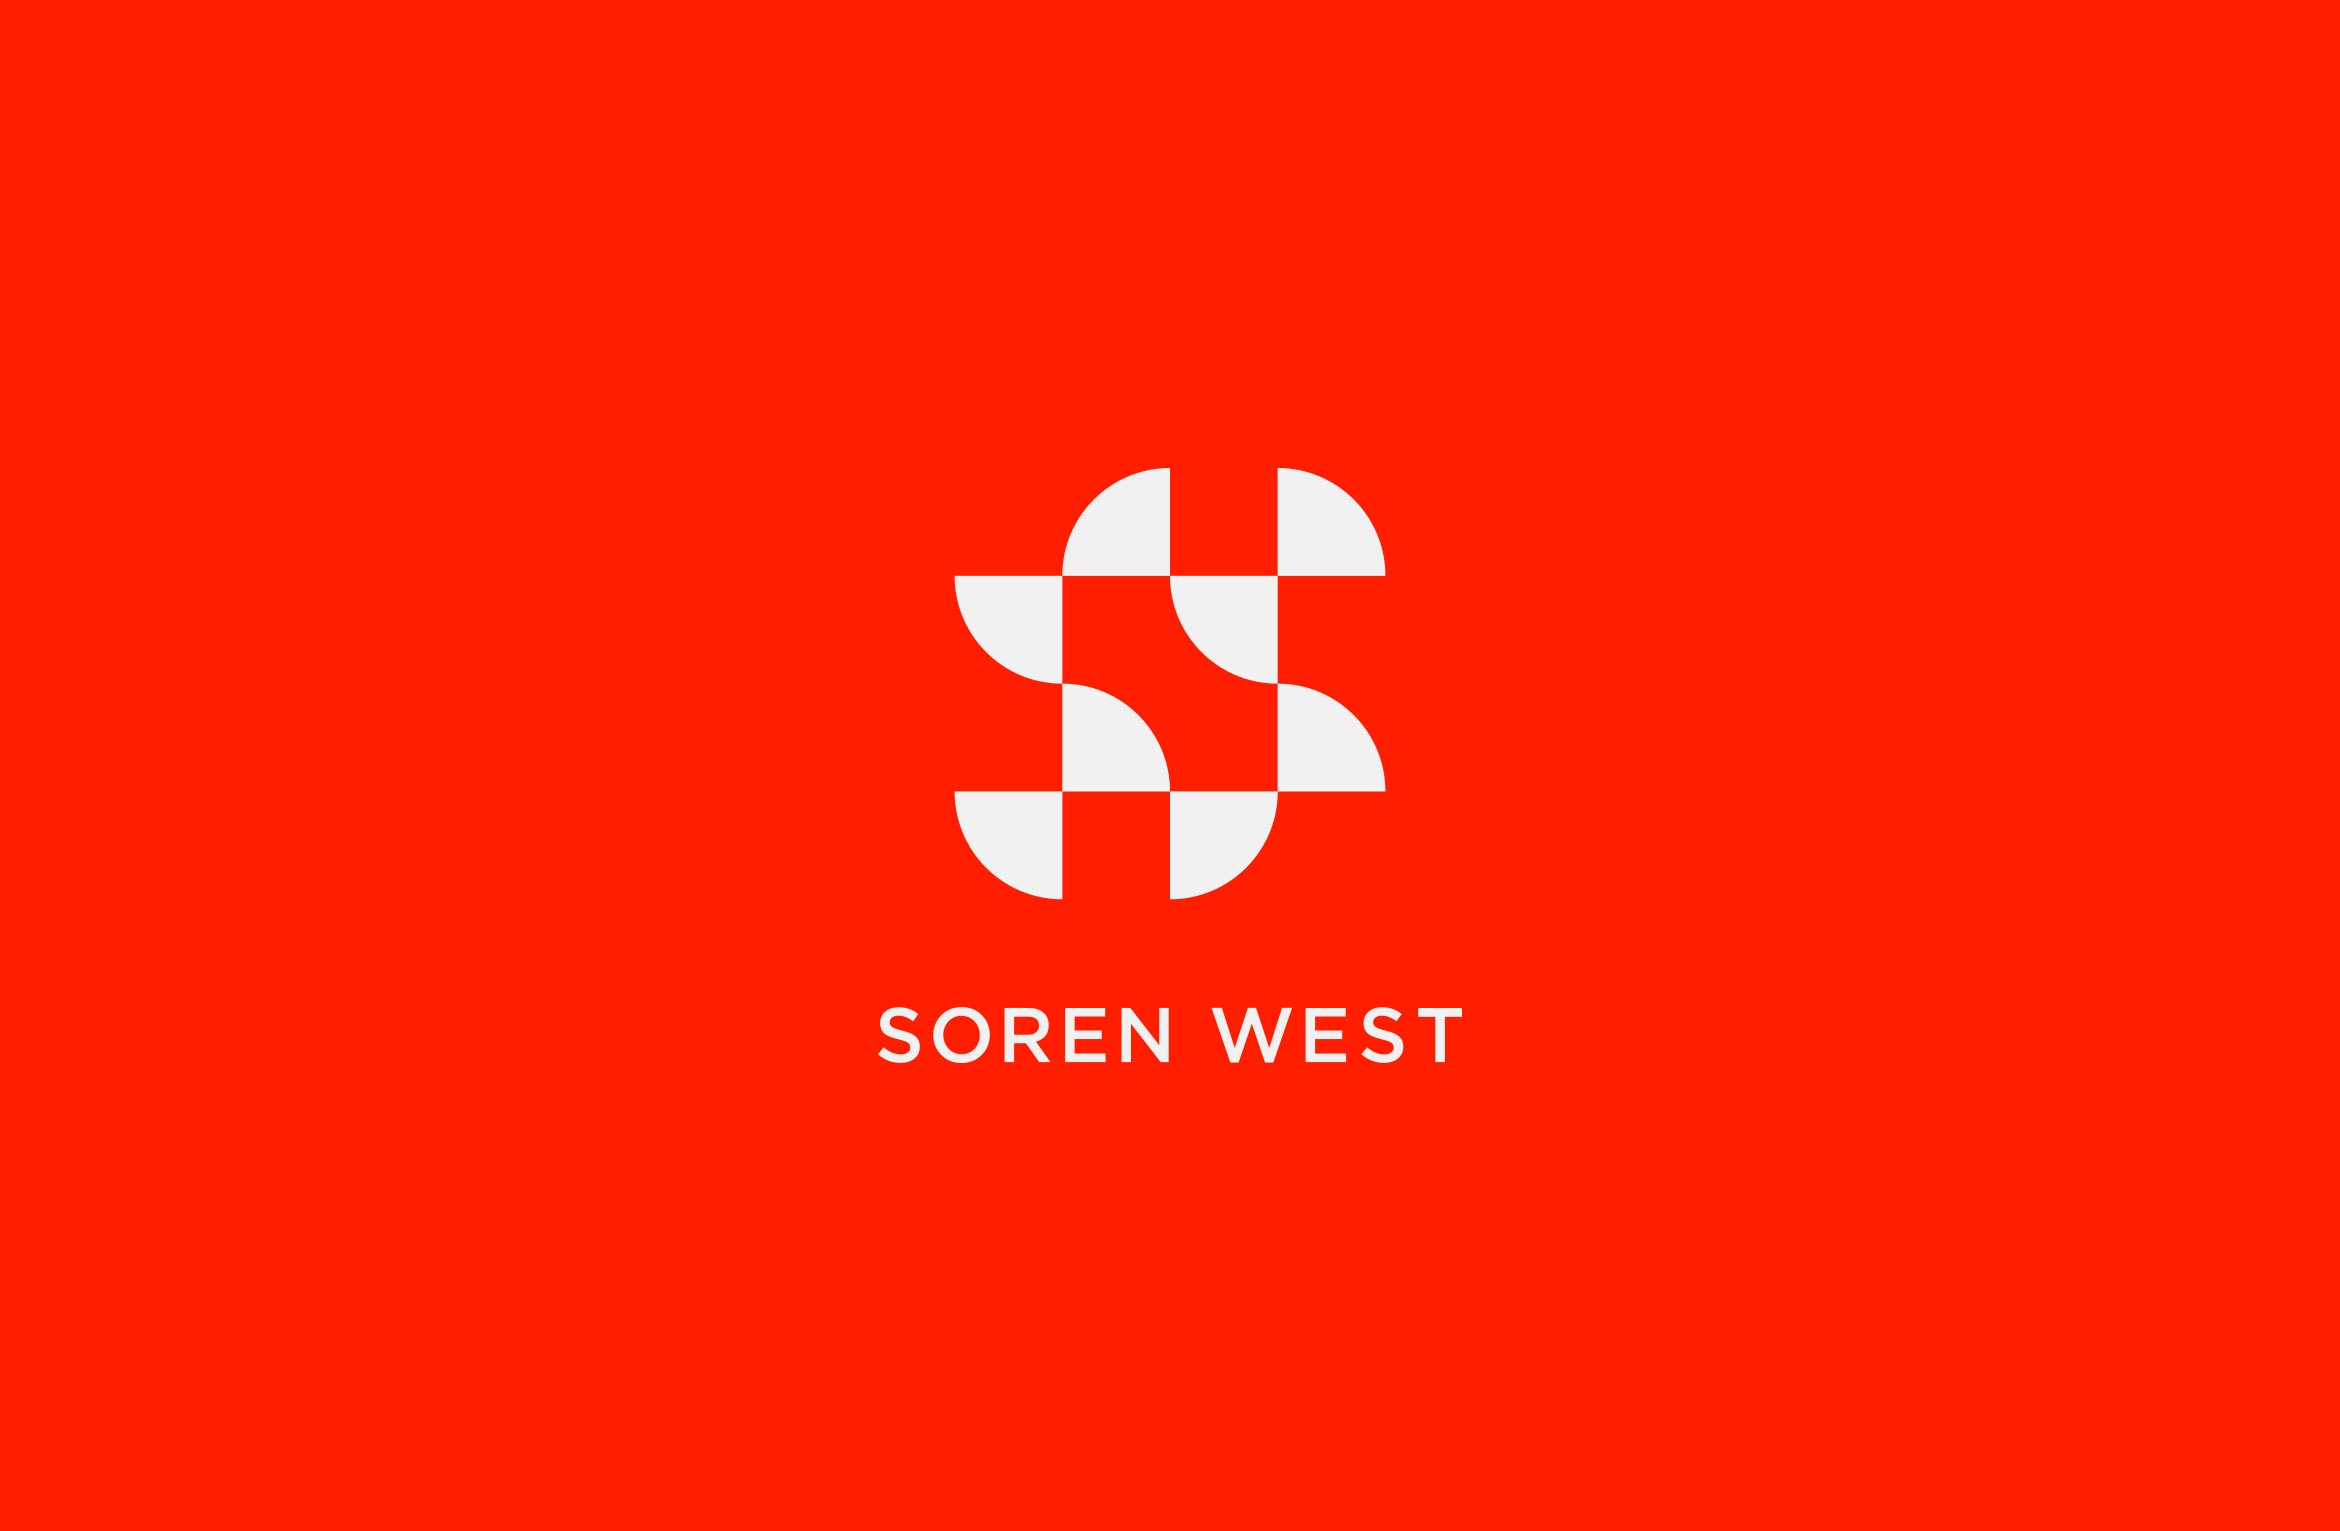 soren west white logo on red